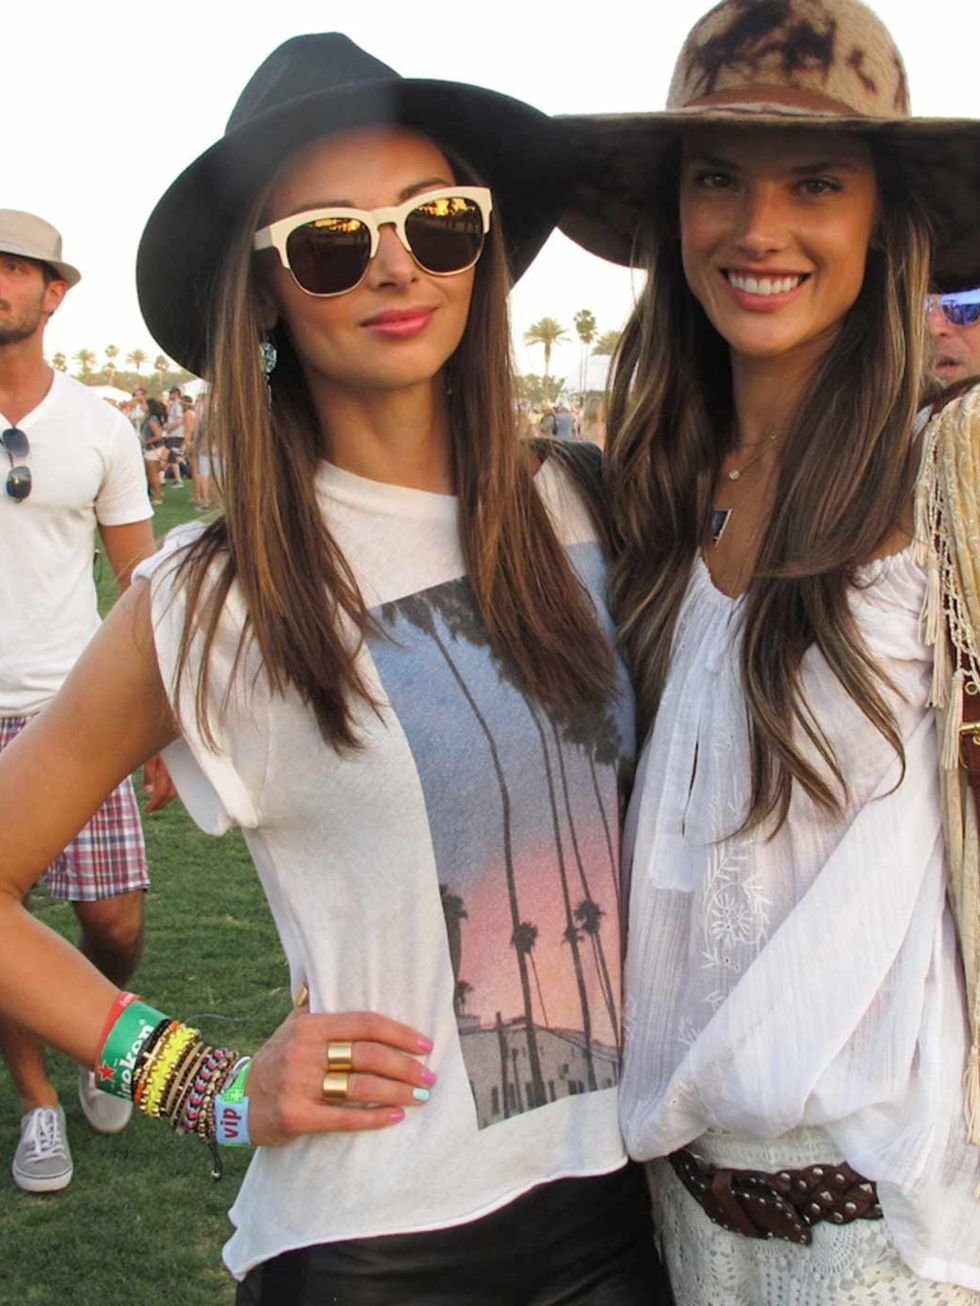 <p>Model <a href="http://www.elleuk.com/star-style/celebrity-style-files/alessandra-ambrosio">Alessandra Ambrosio</a> and friend at Coachella 2013.</p>